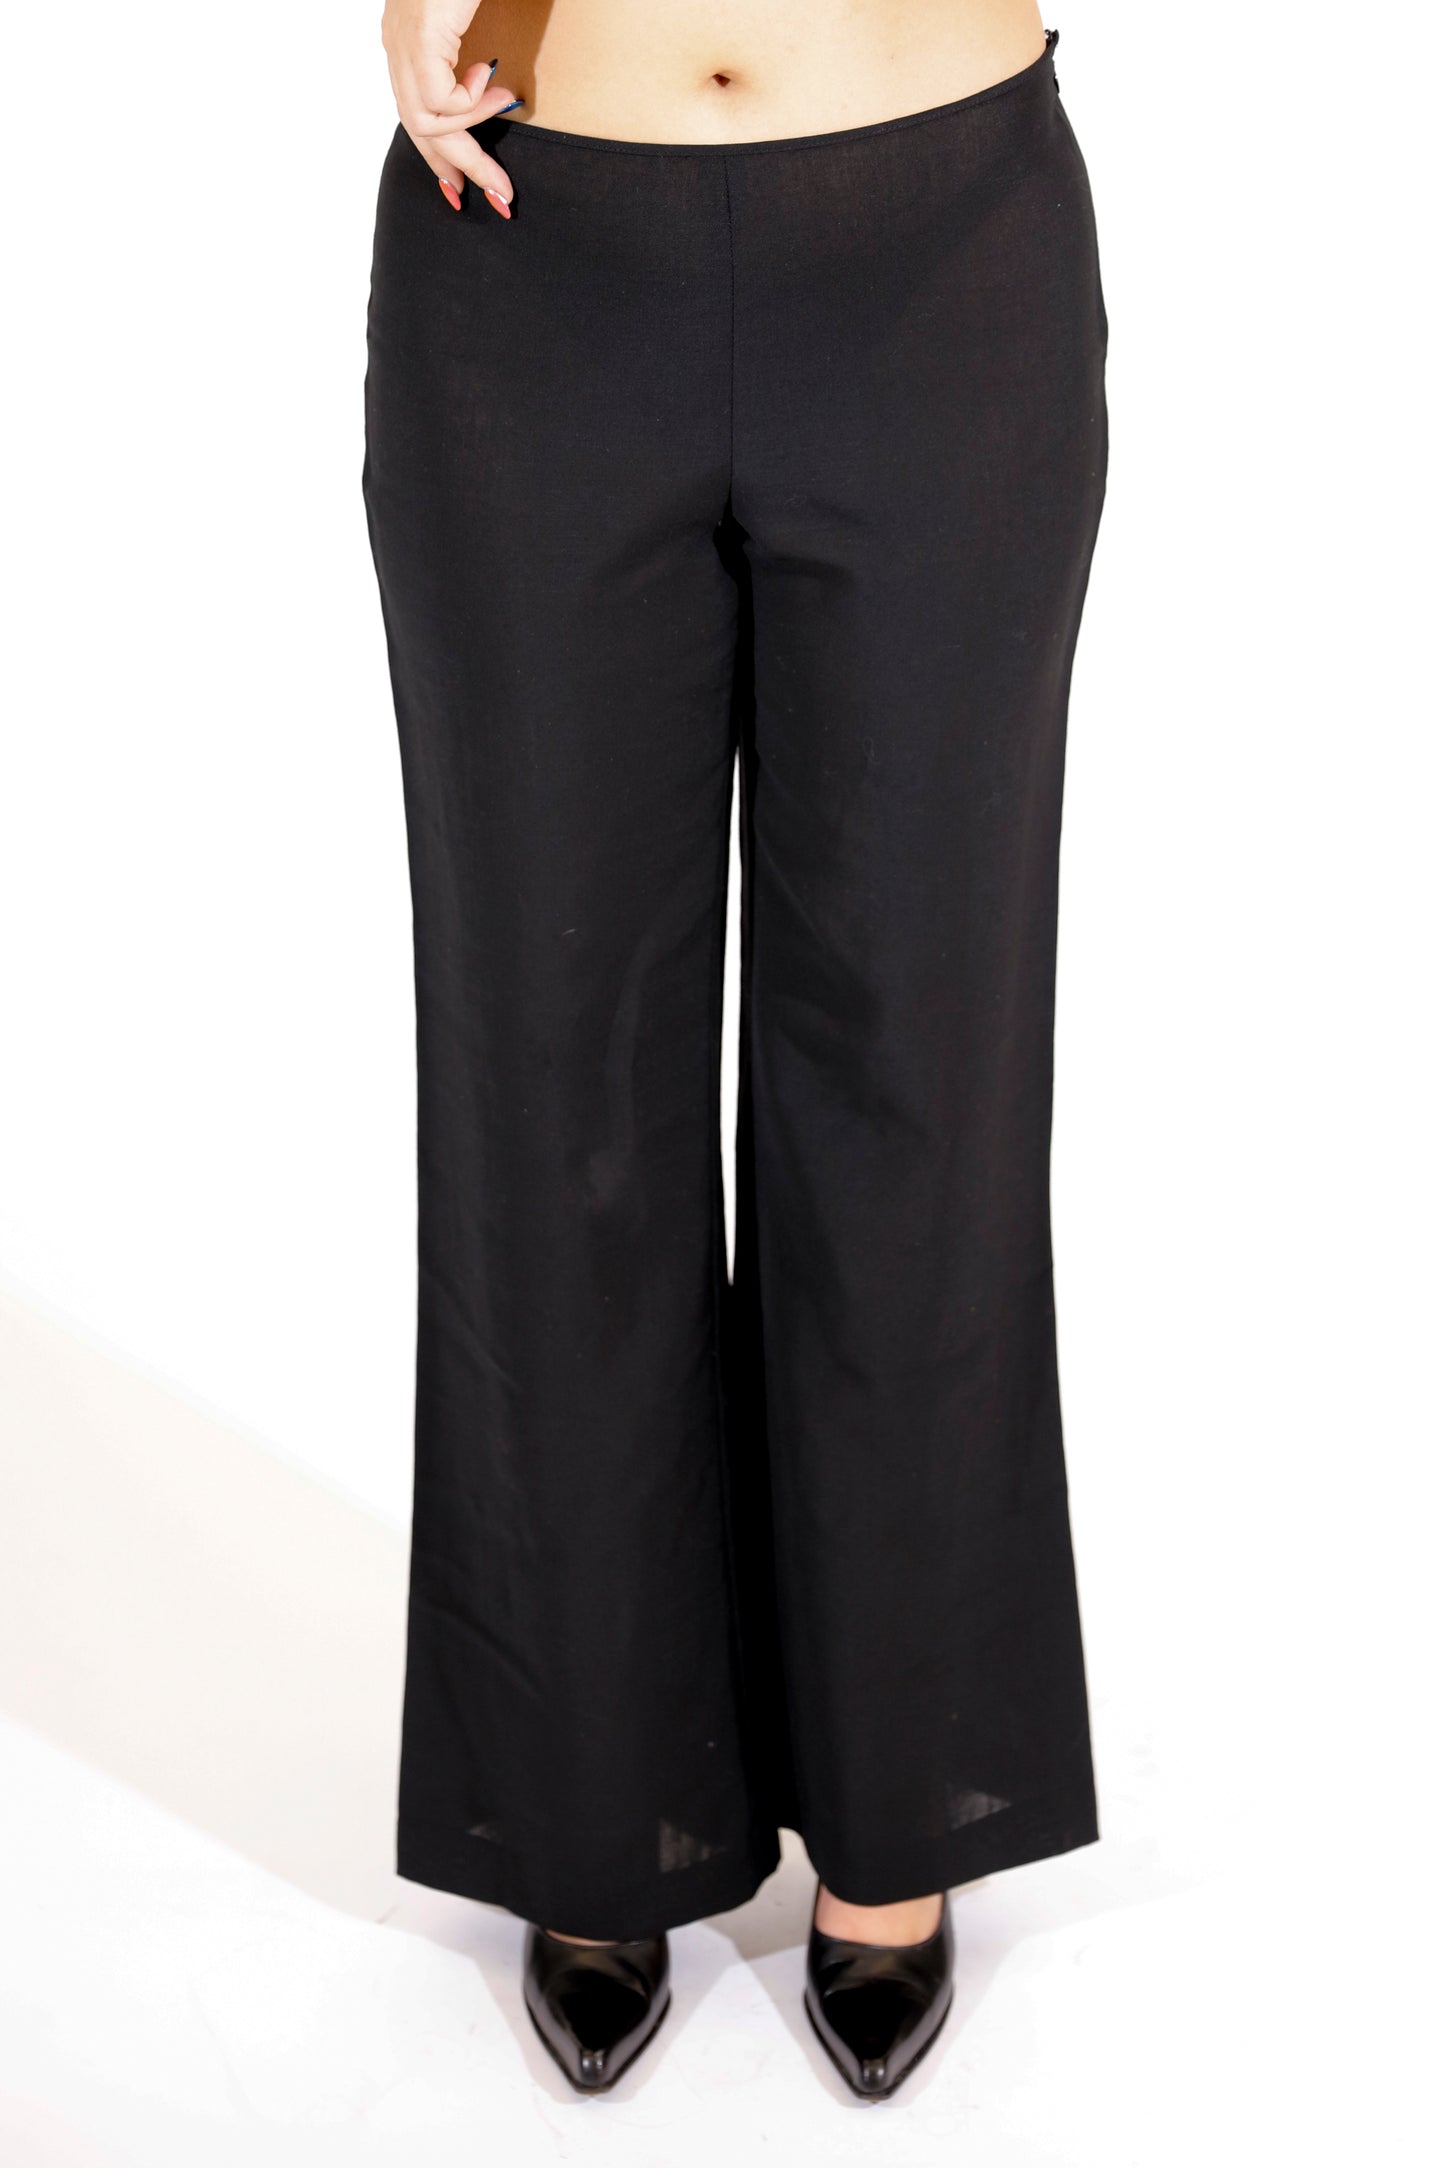 Jean Paul Gaultier Black Sheer Pants